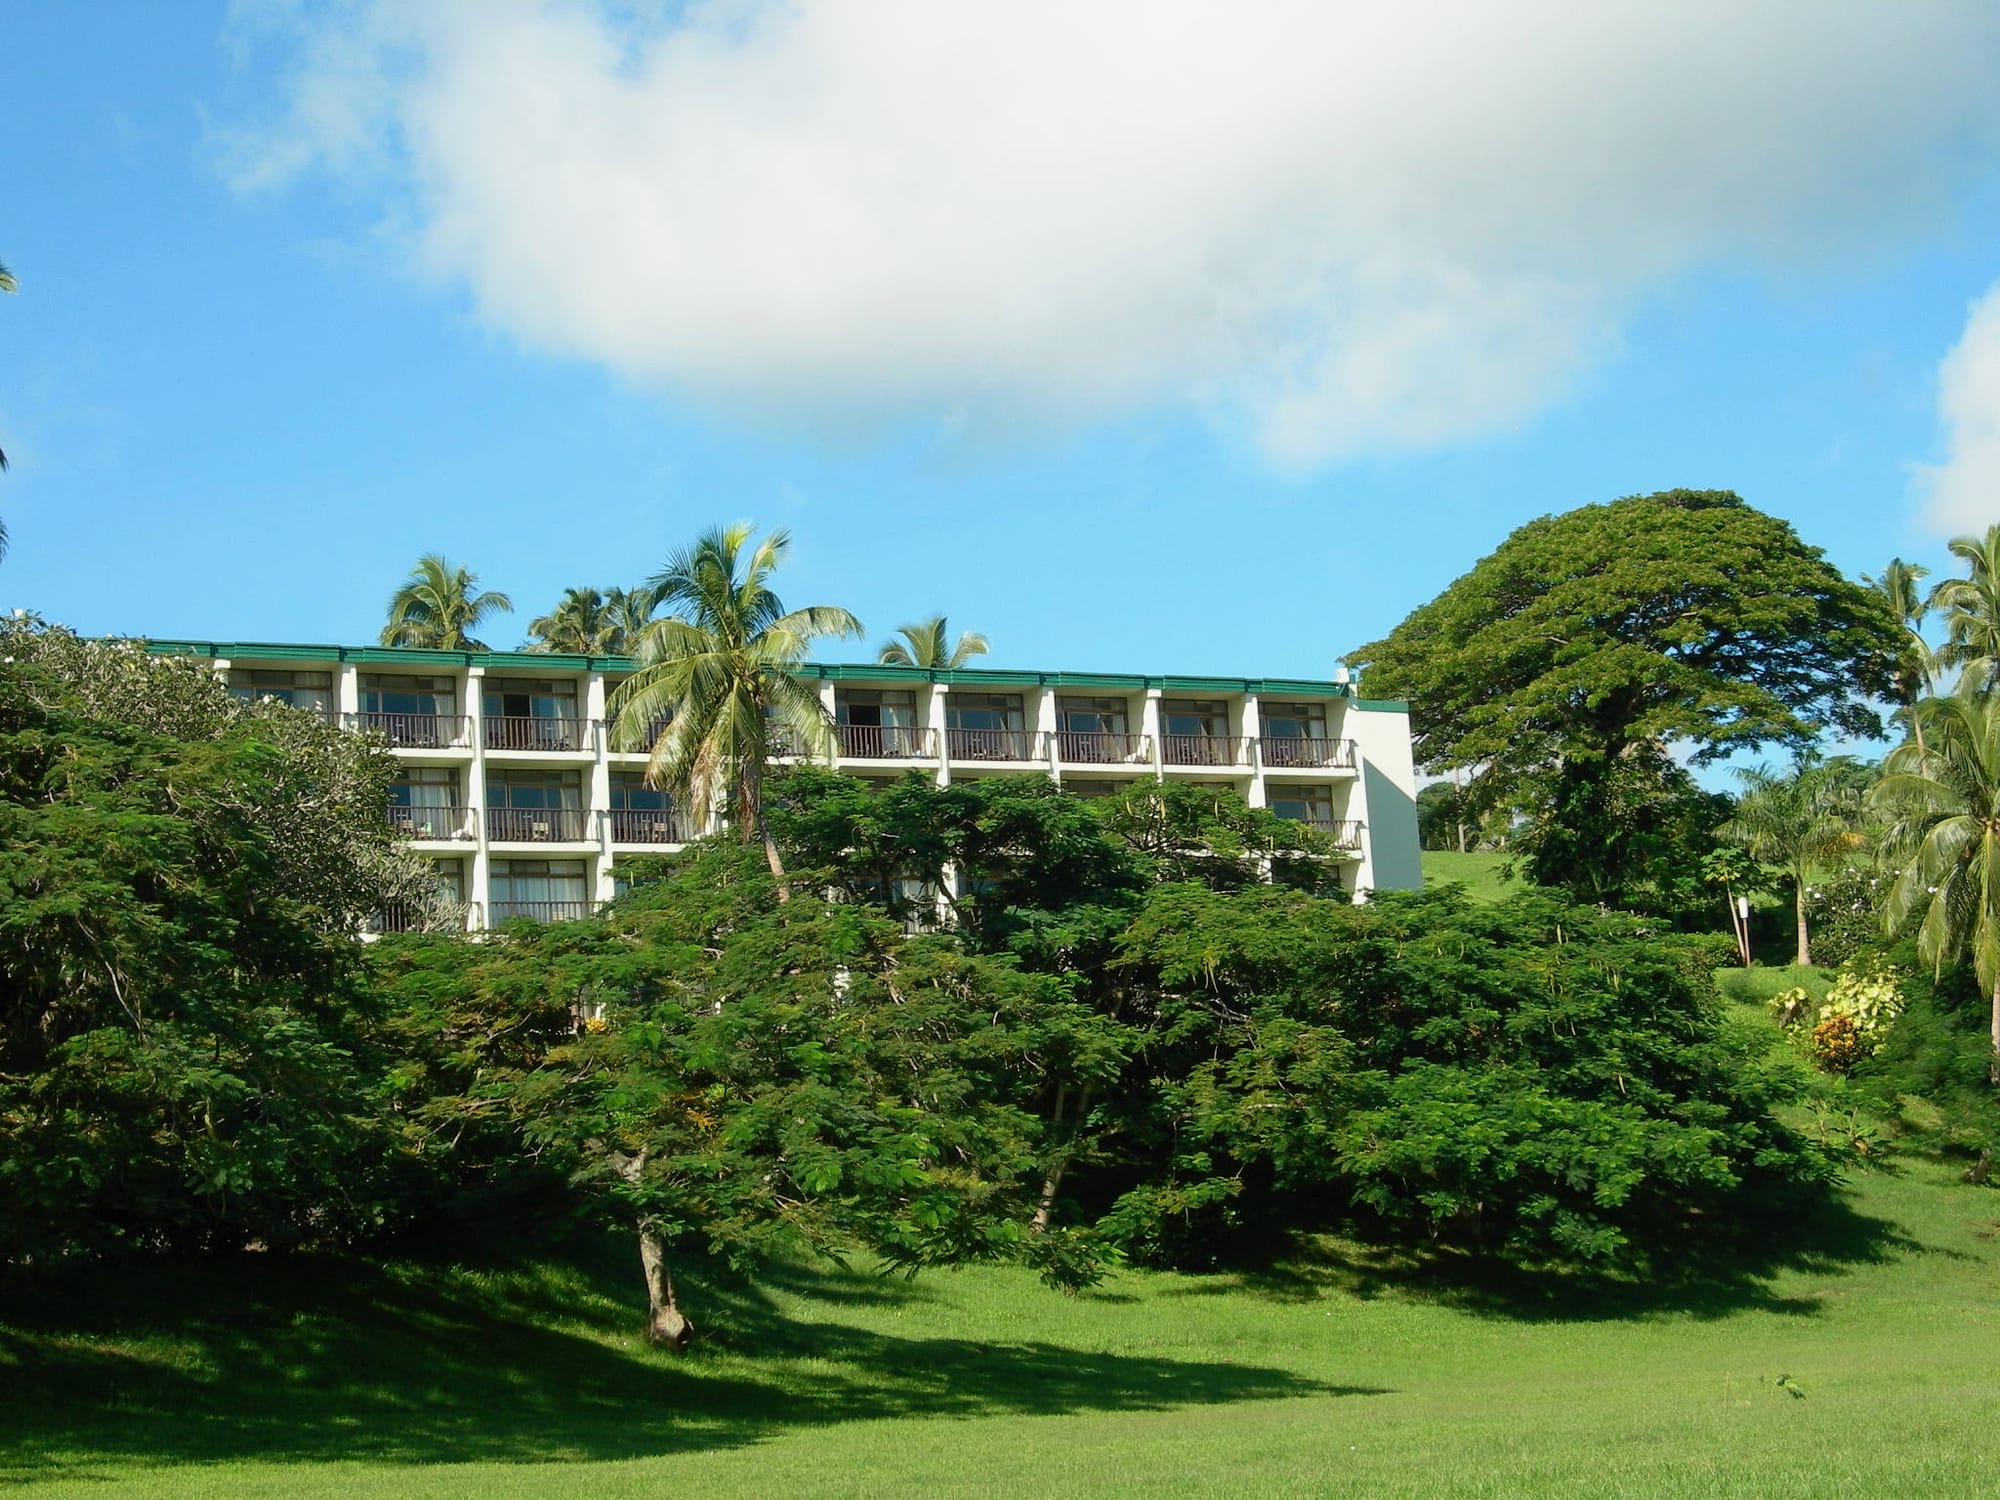 Savusavu Hot Springs Hotel, Savusavu, Vanua Levu, Fiji